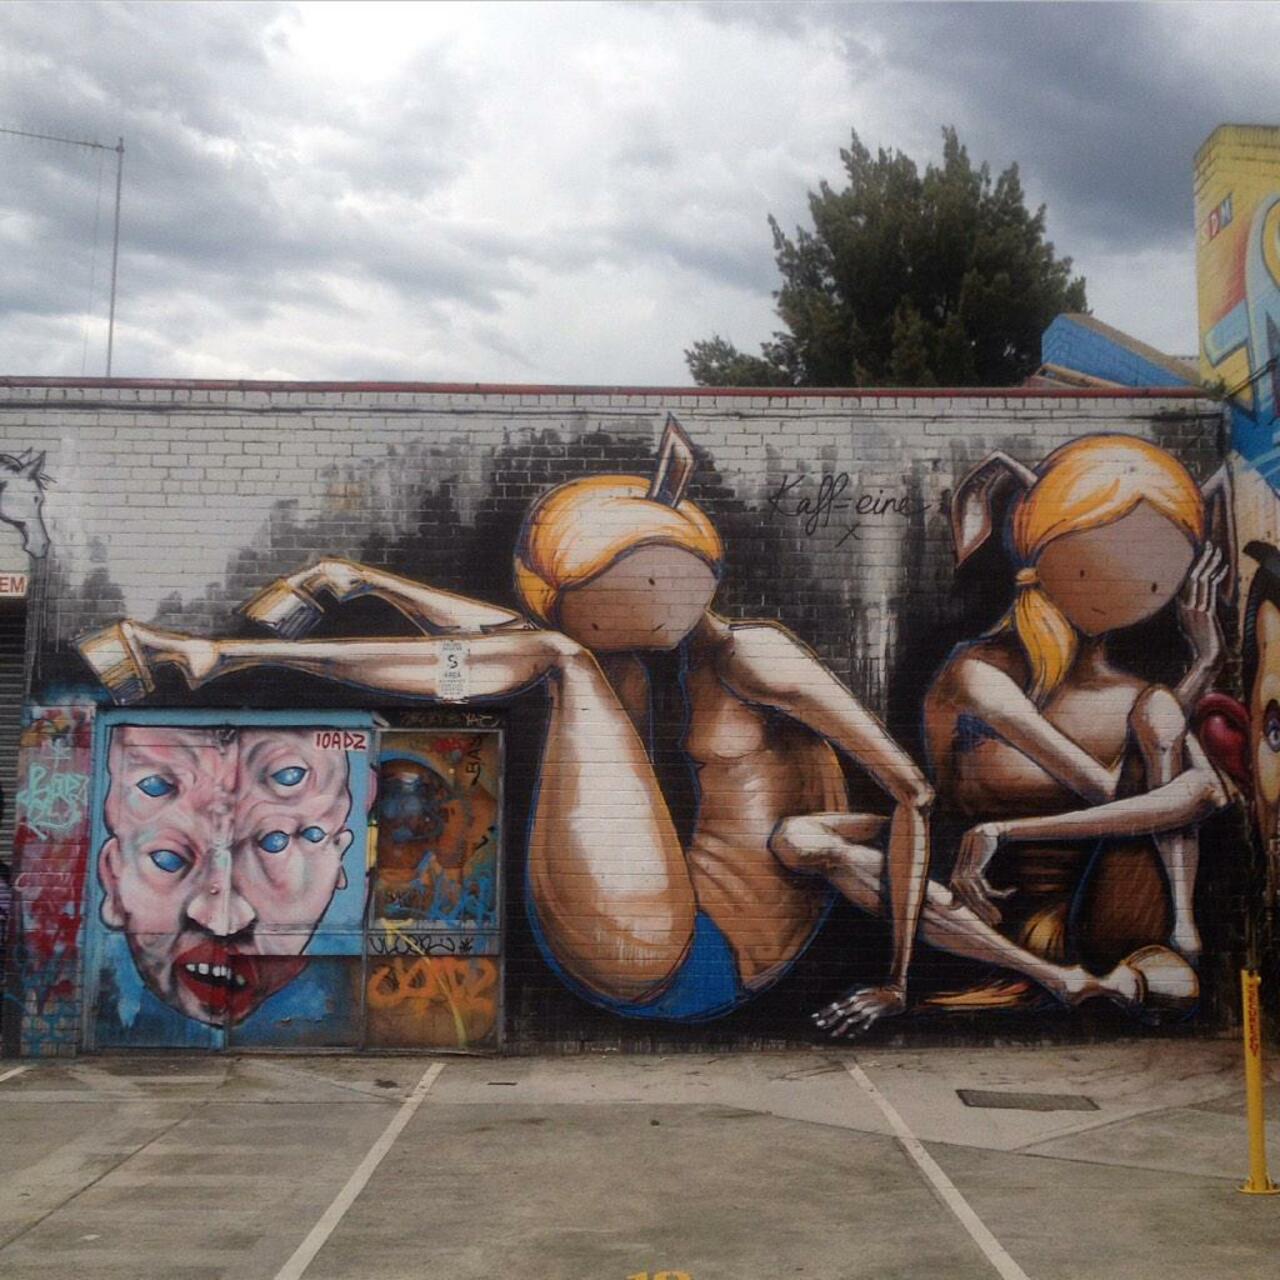 #kaffeine Wonderful as always Melbourne #streetart #mural #graffiti http://t.co/S79fkq5bTY